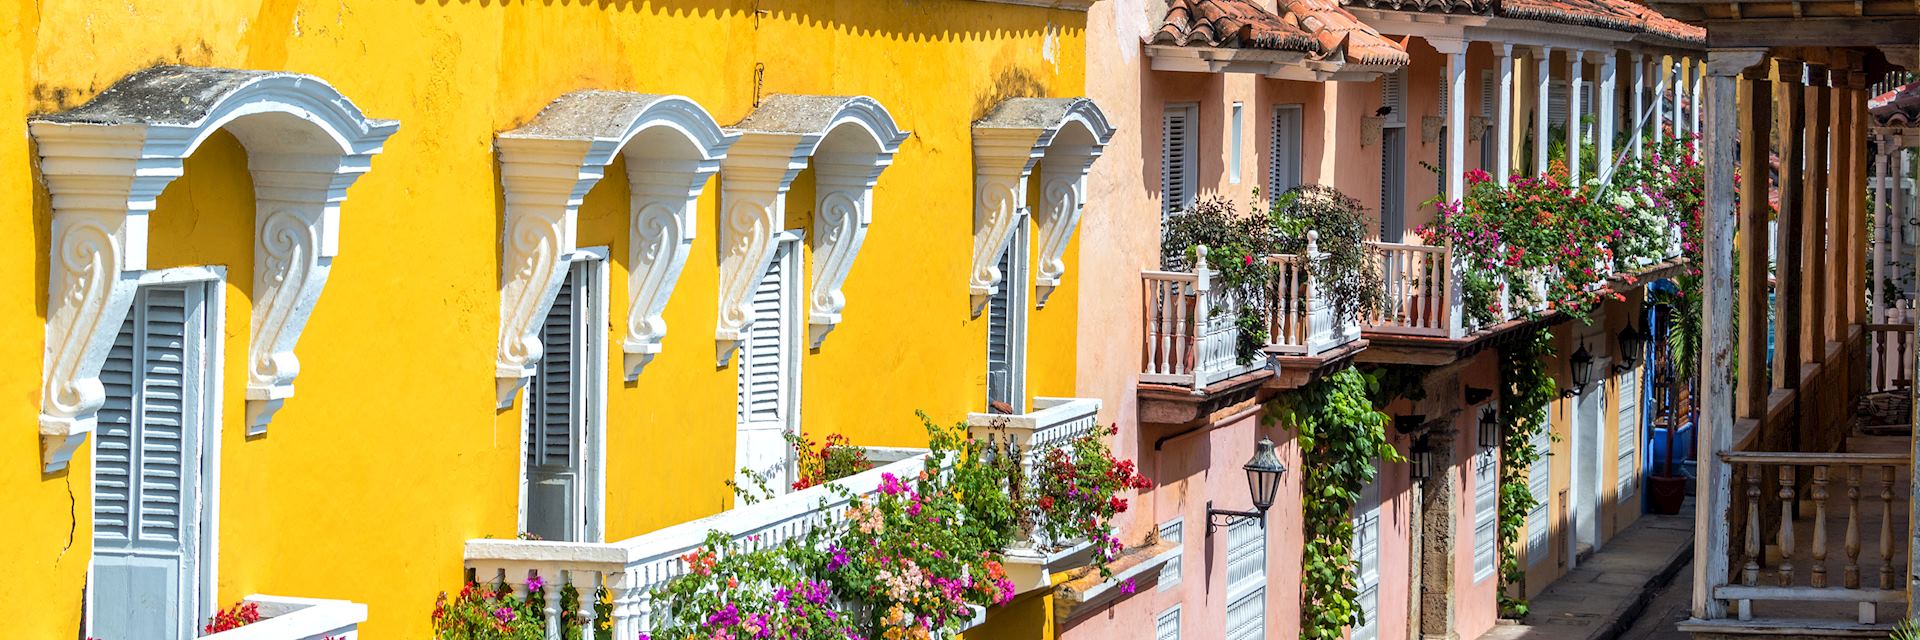 Colonial style balconies in Cartagena